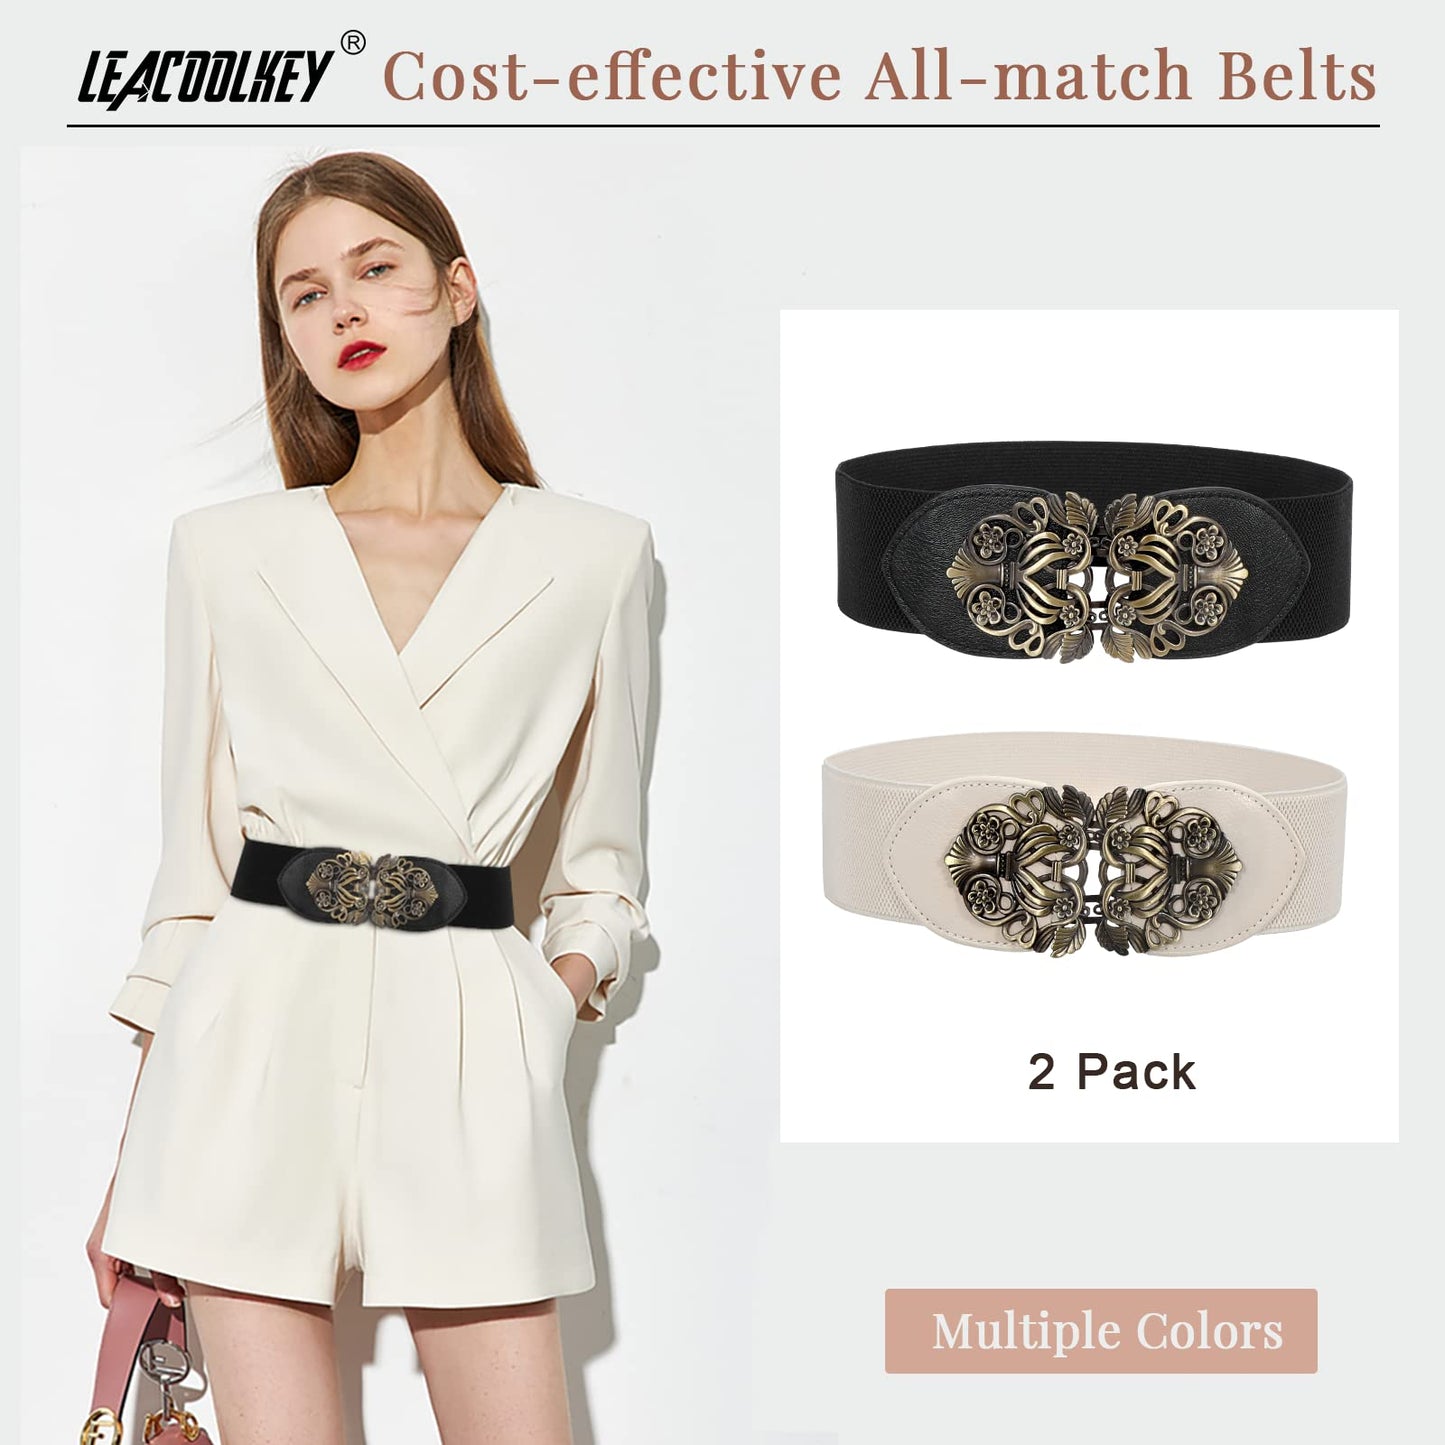 LEACOOLKEY 2/3/4 Pack Women Vintage Wide Waist Belt for Dress, Elastic Cinch Belt with Retro Interlocking Buckle